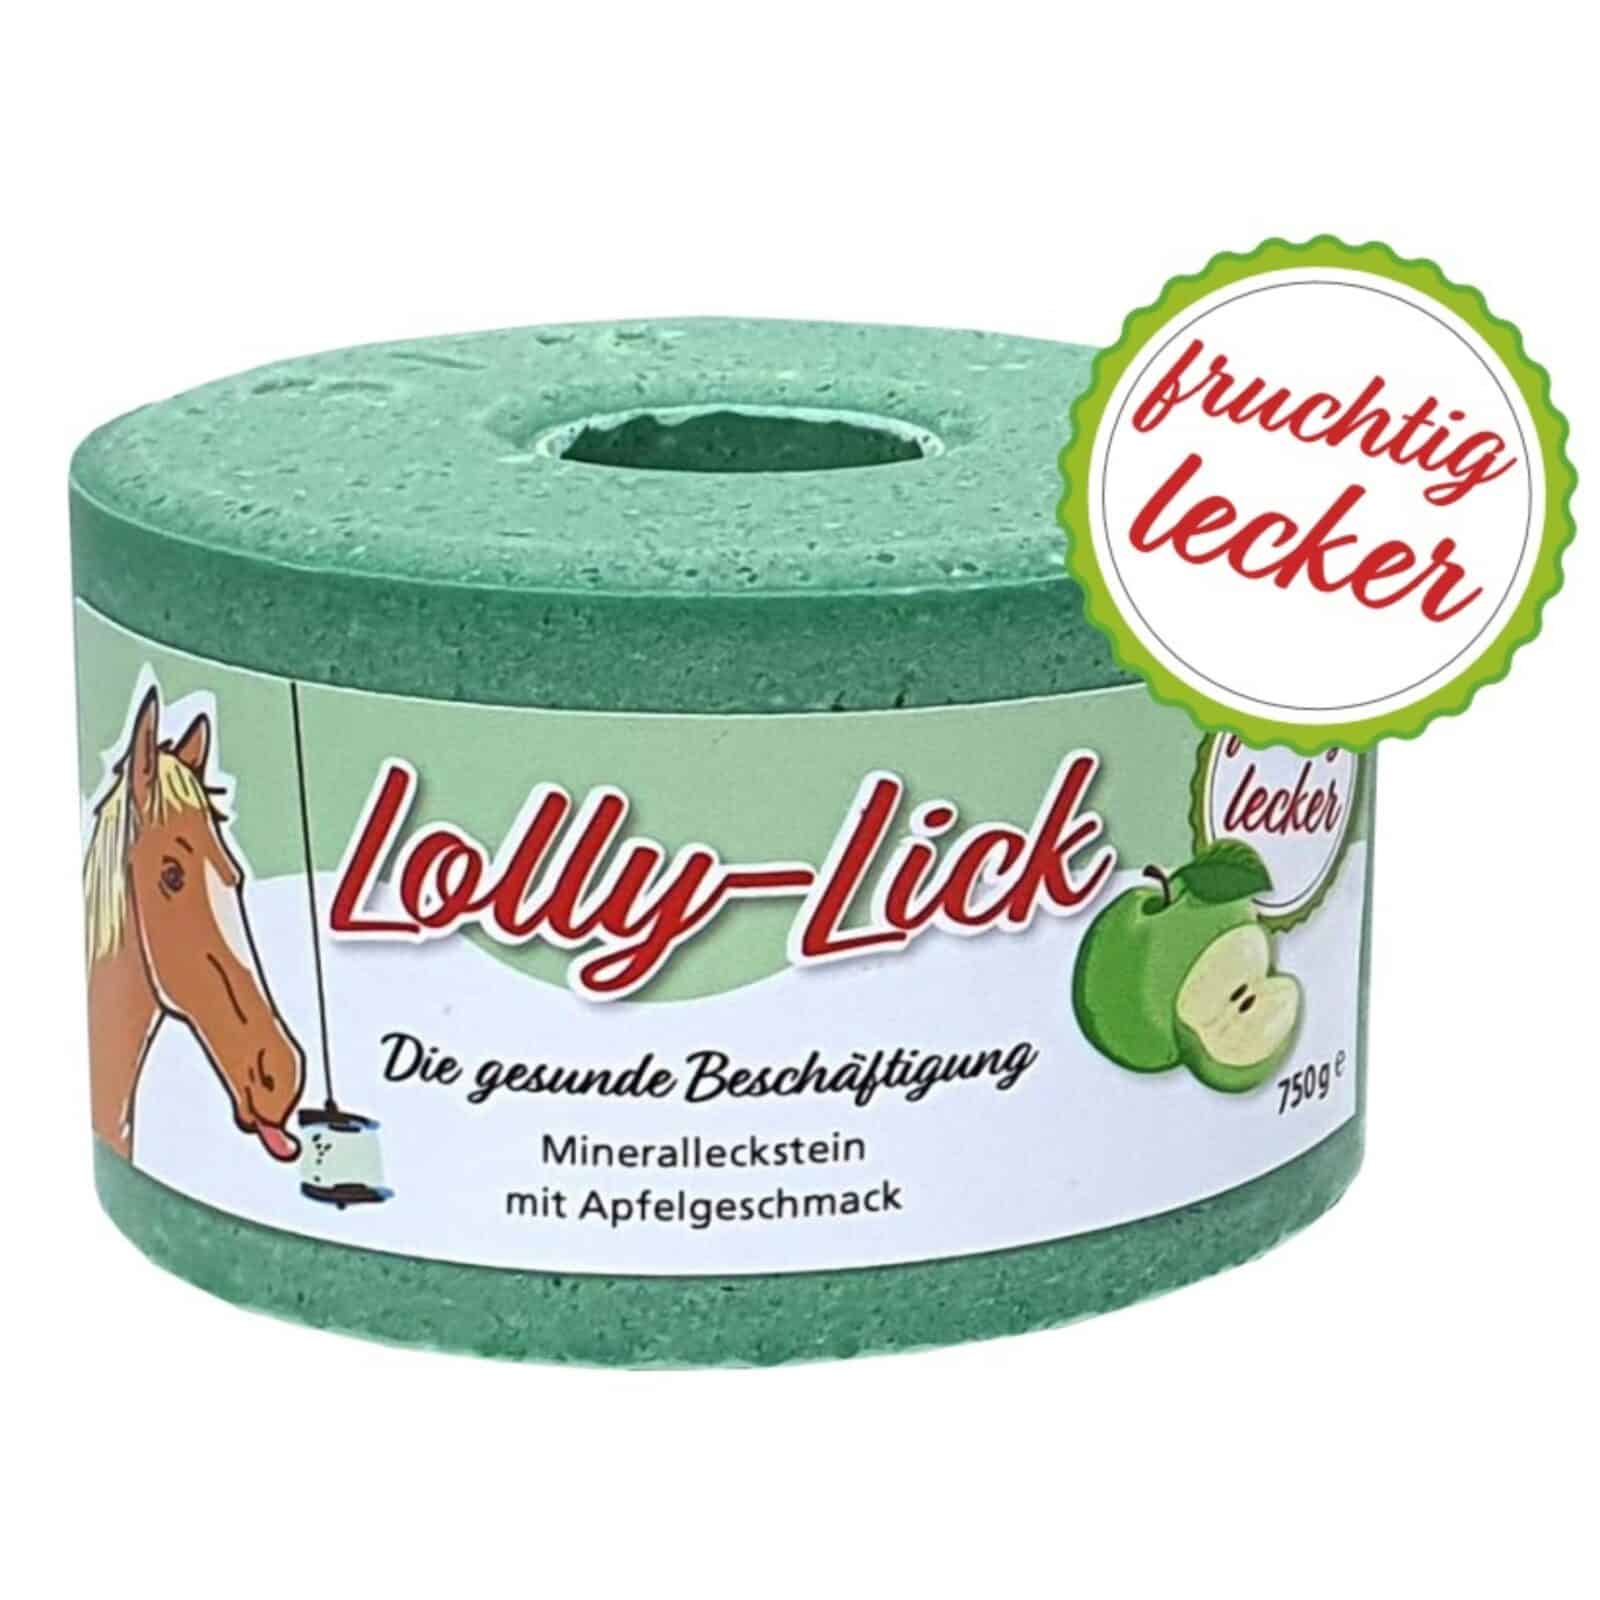 ReiterliveLolly-Lick_Apfel_neutral